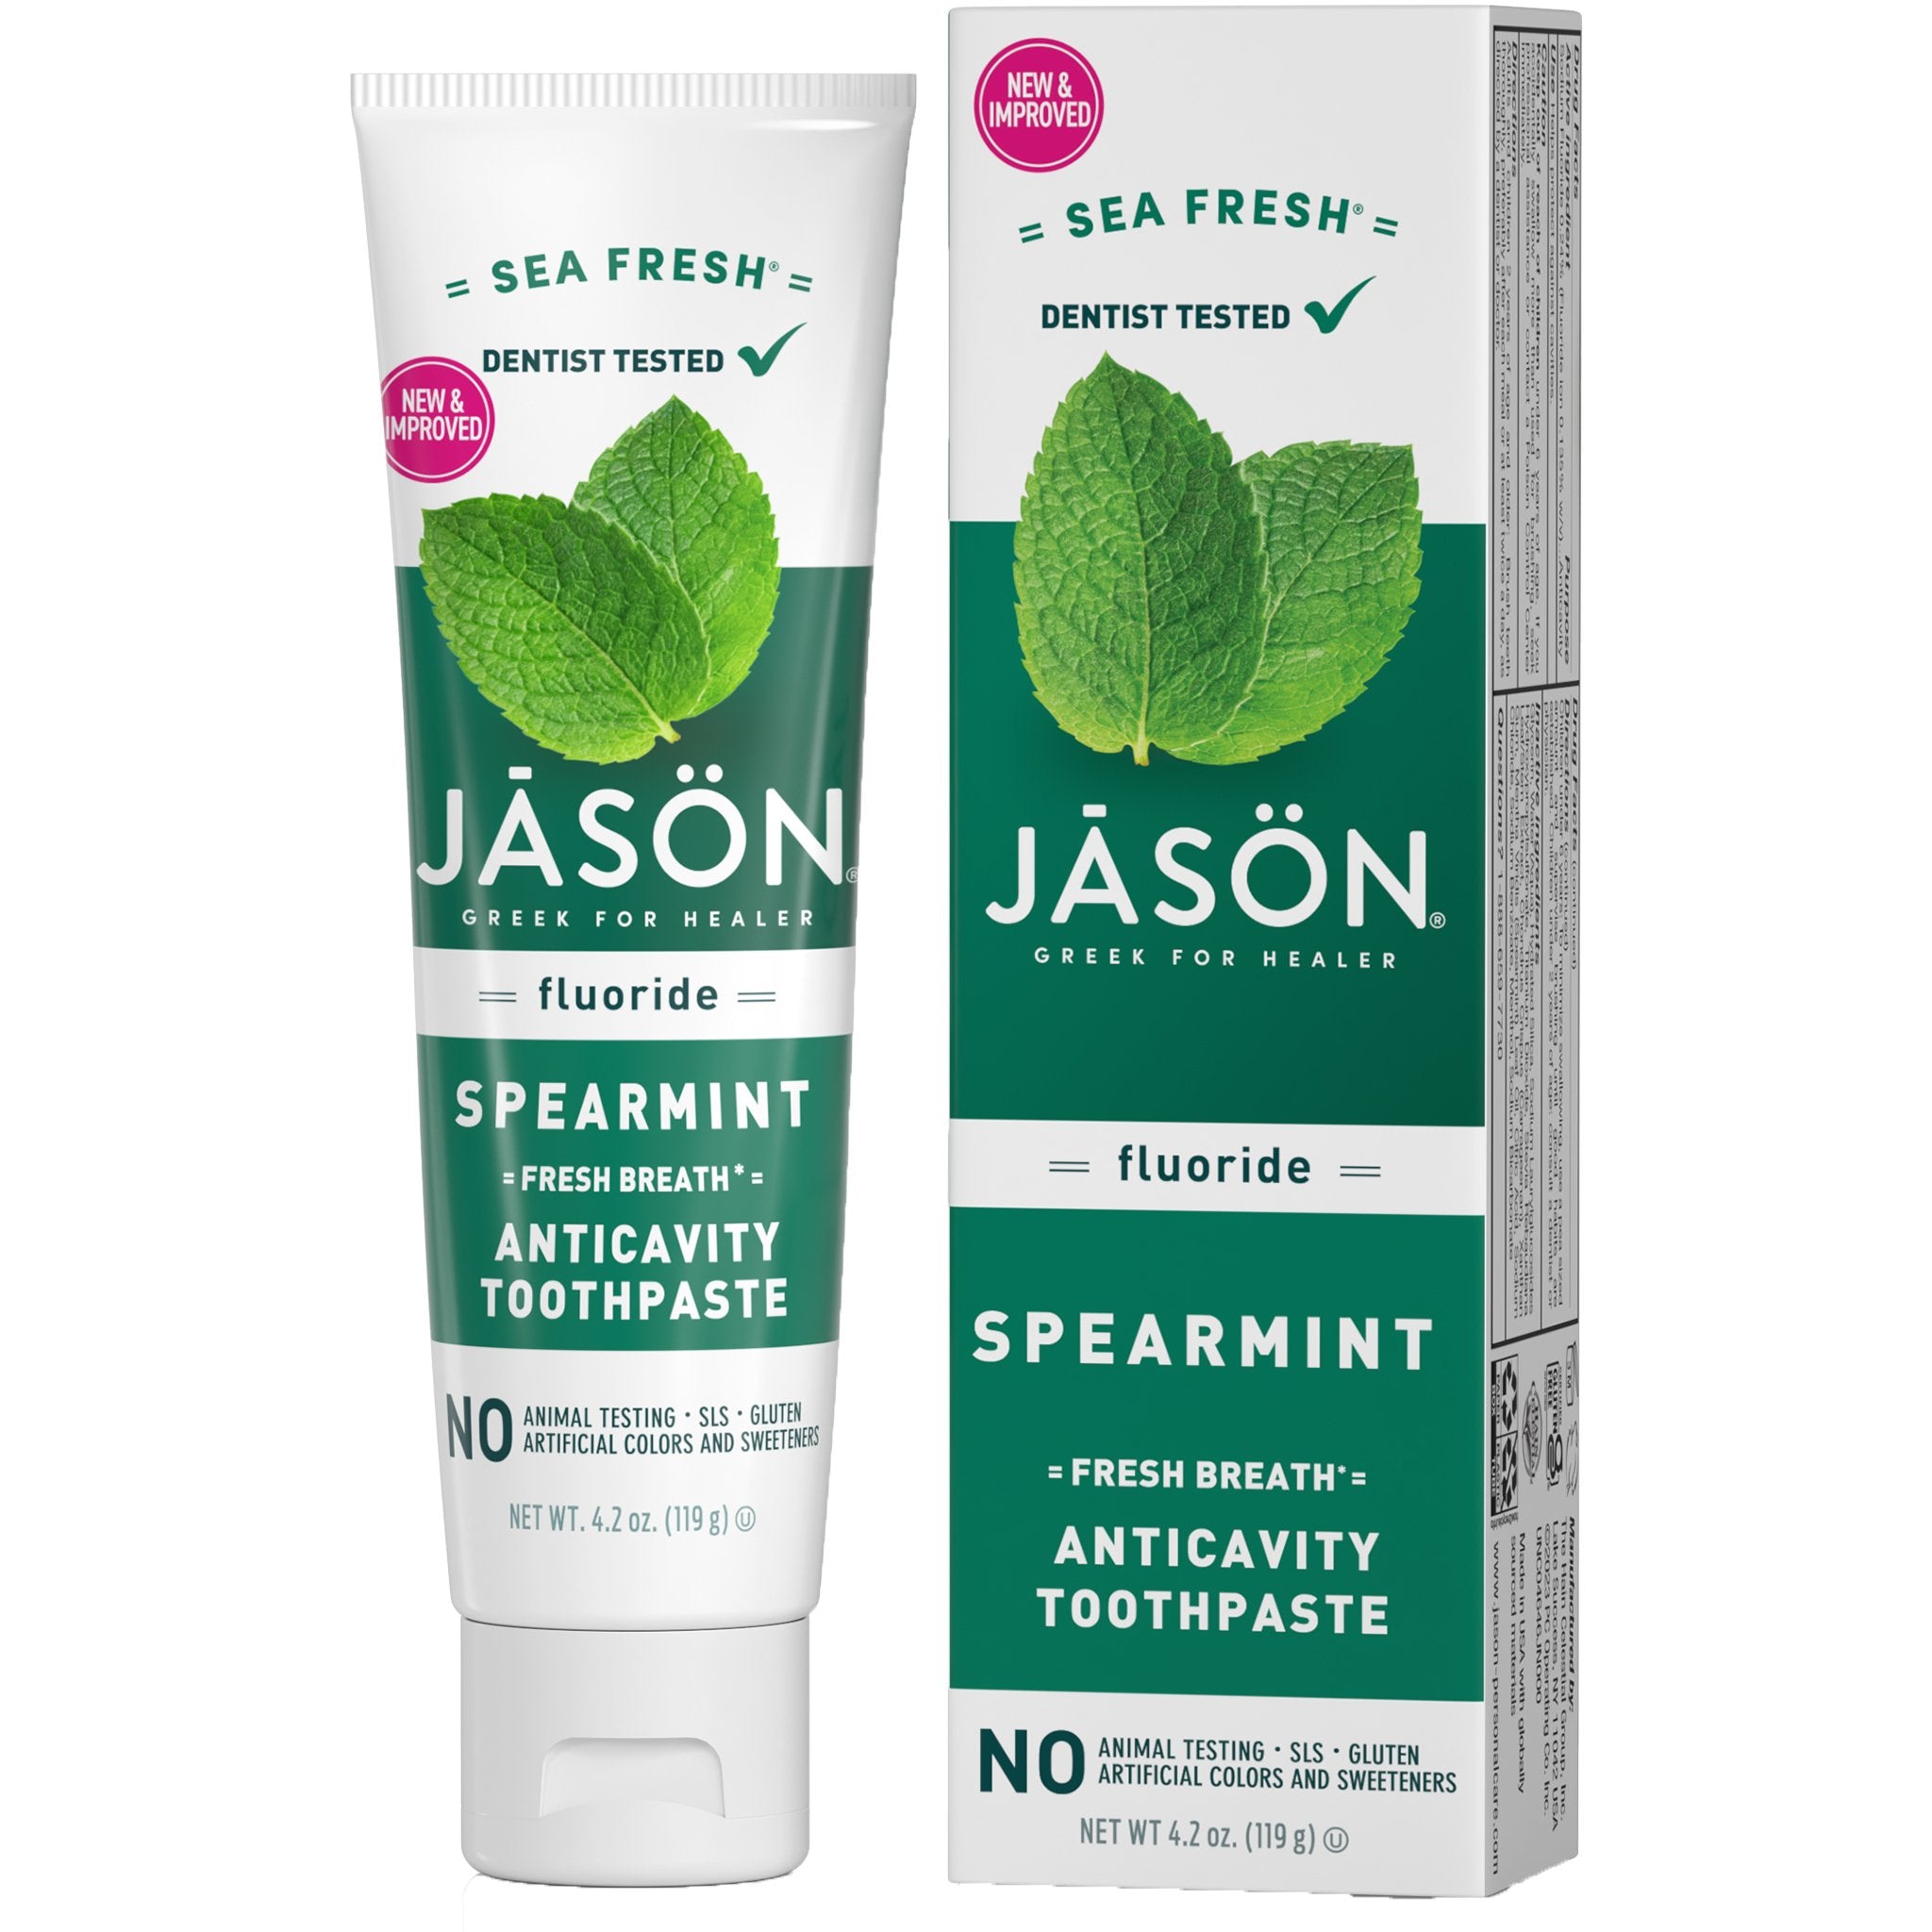 Sea Fresh® Spearmint Fresh Breath Toothpaste Fluoride Free - mypure.co.uk